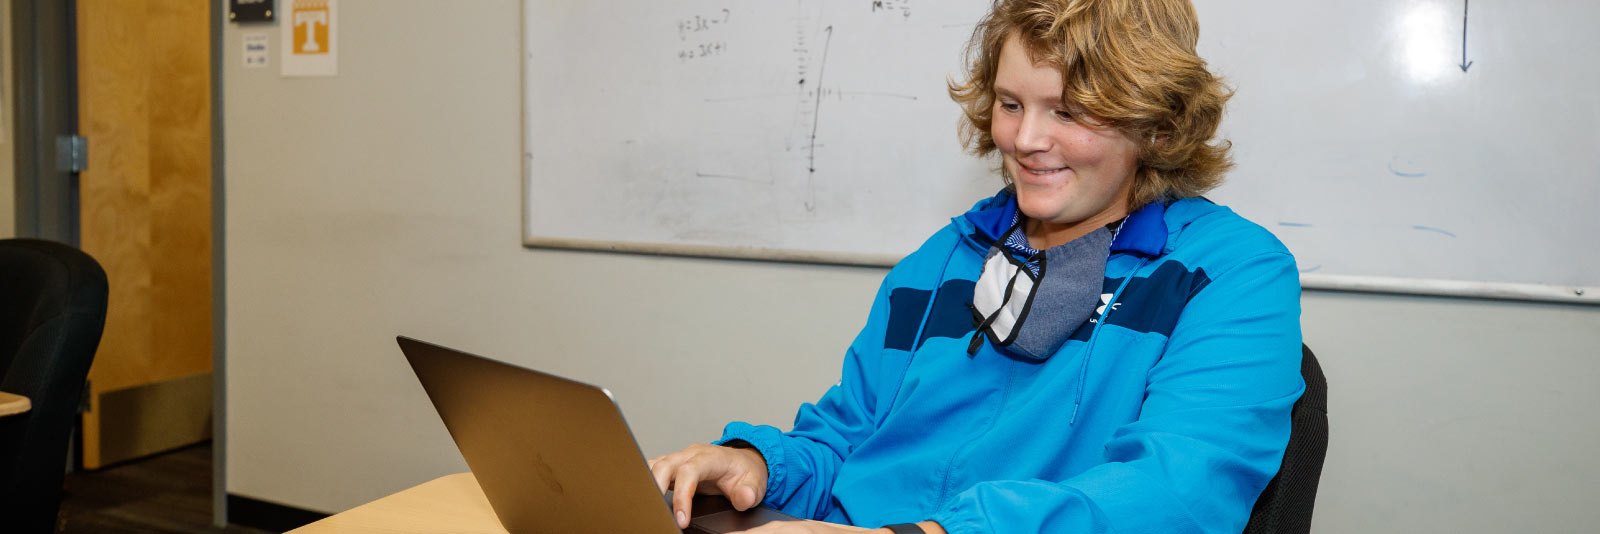 student-athlete on computer